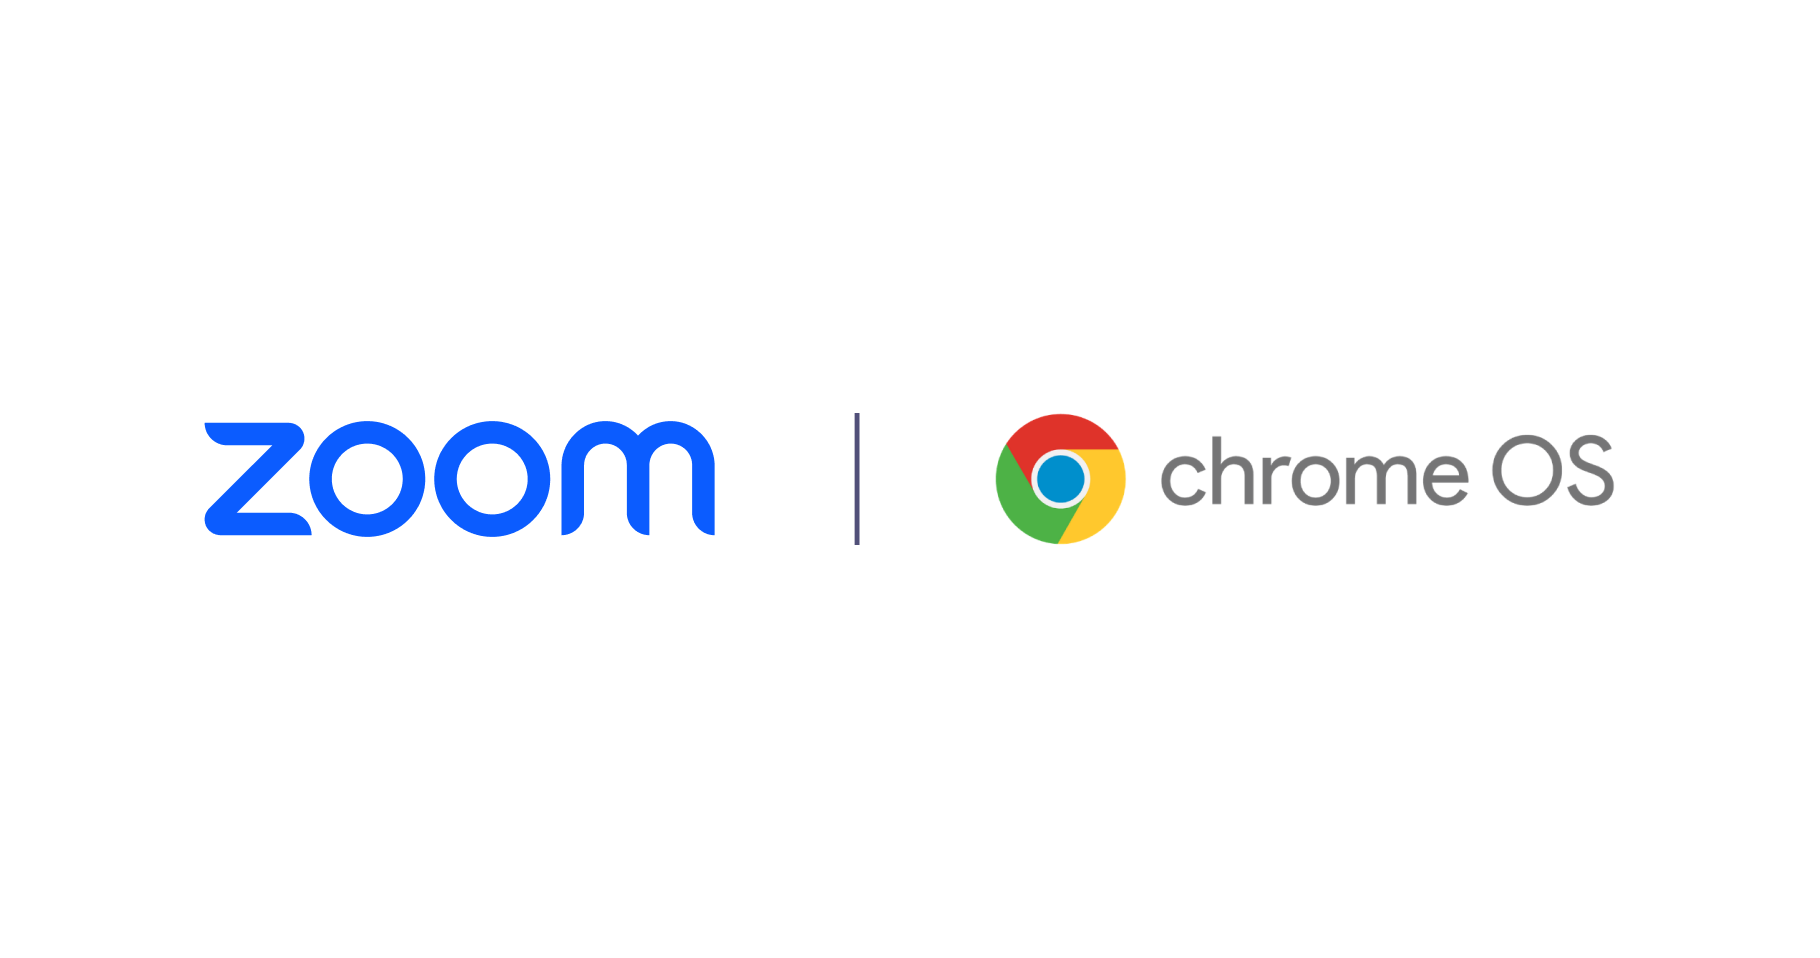 Zoom and Chrome OS